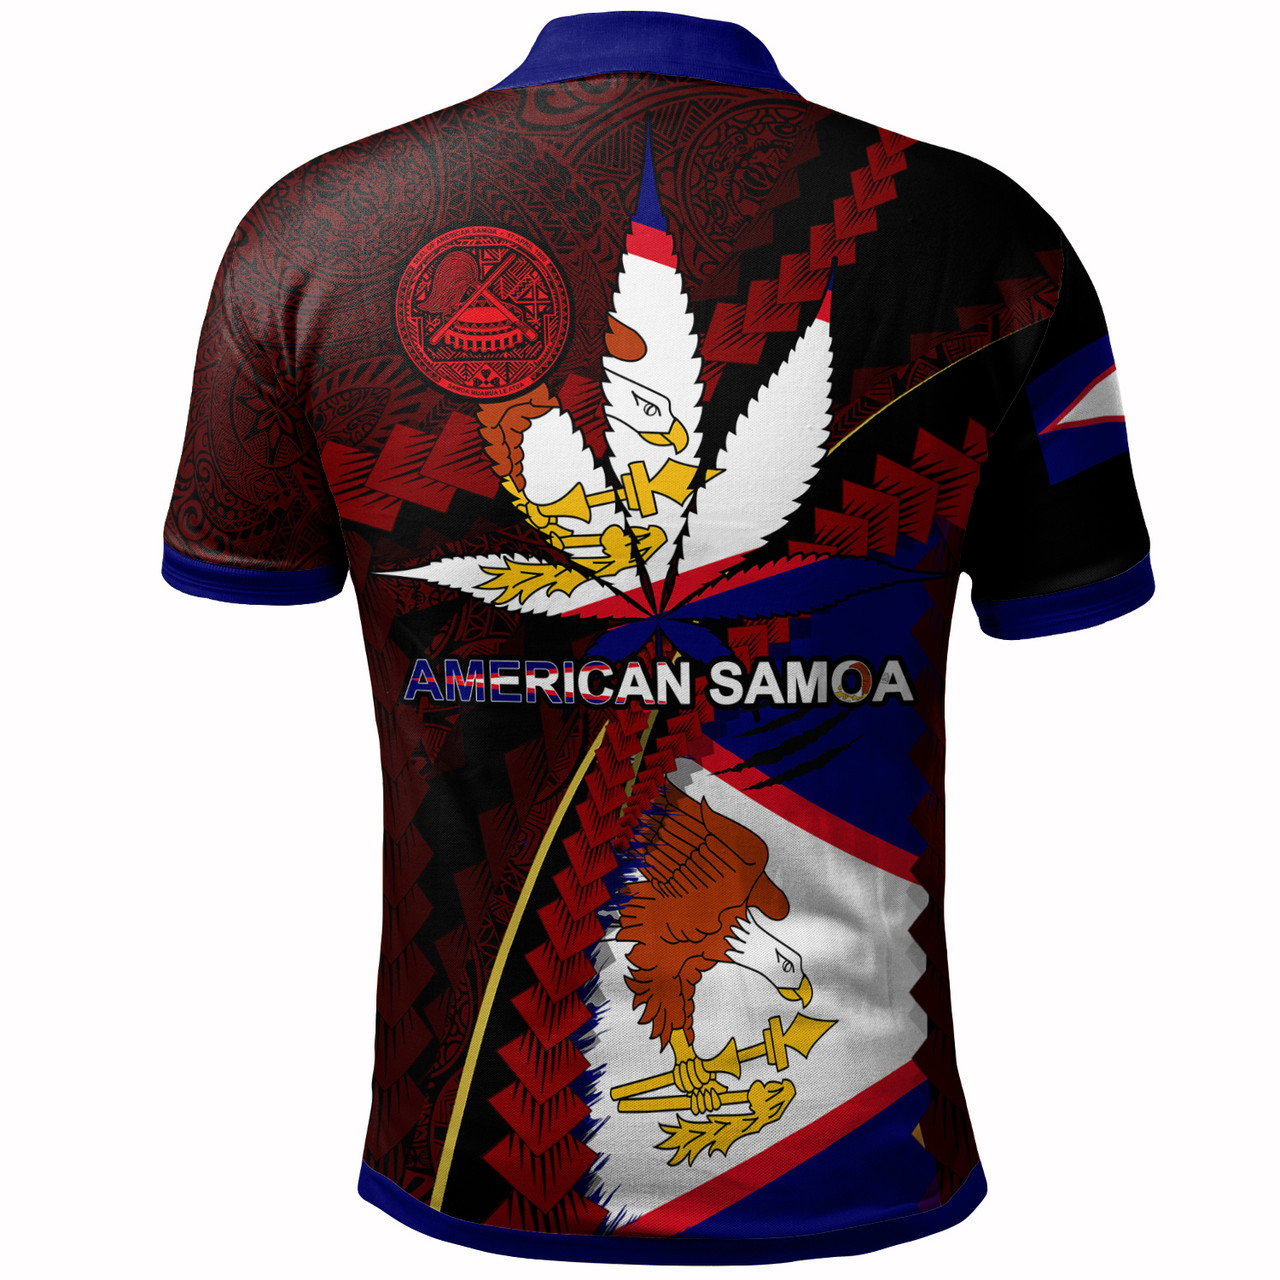 American Samoa Polo Shirt - American Samoa Independence Day With State Flag And Marijuana Leaf Polynesian Style